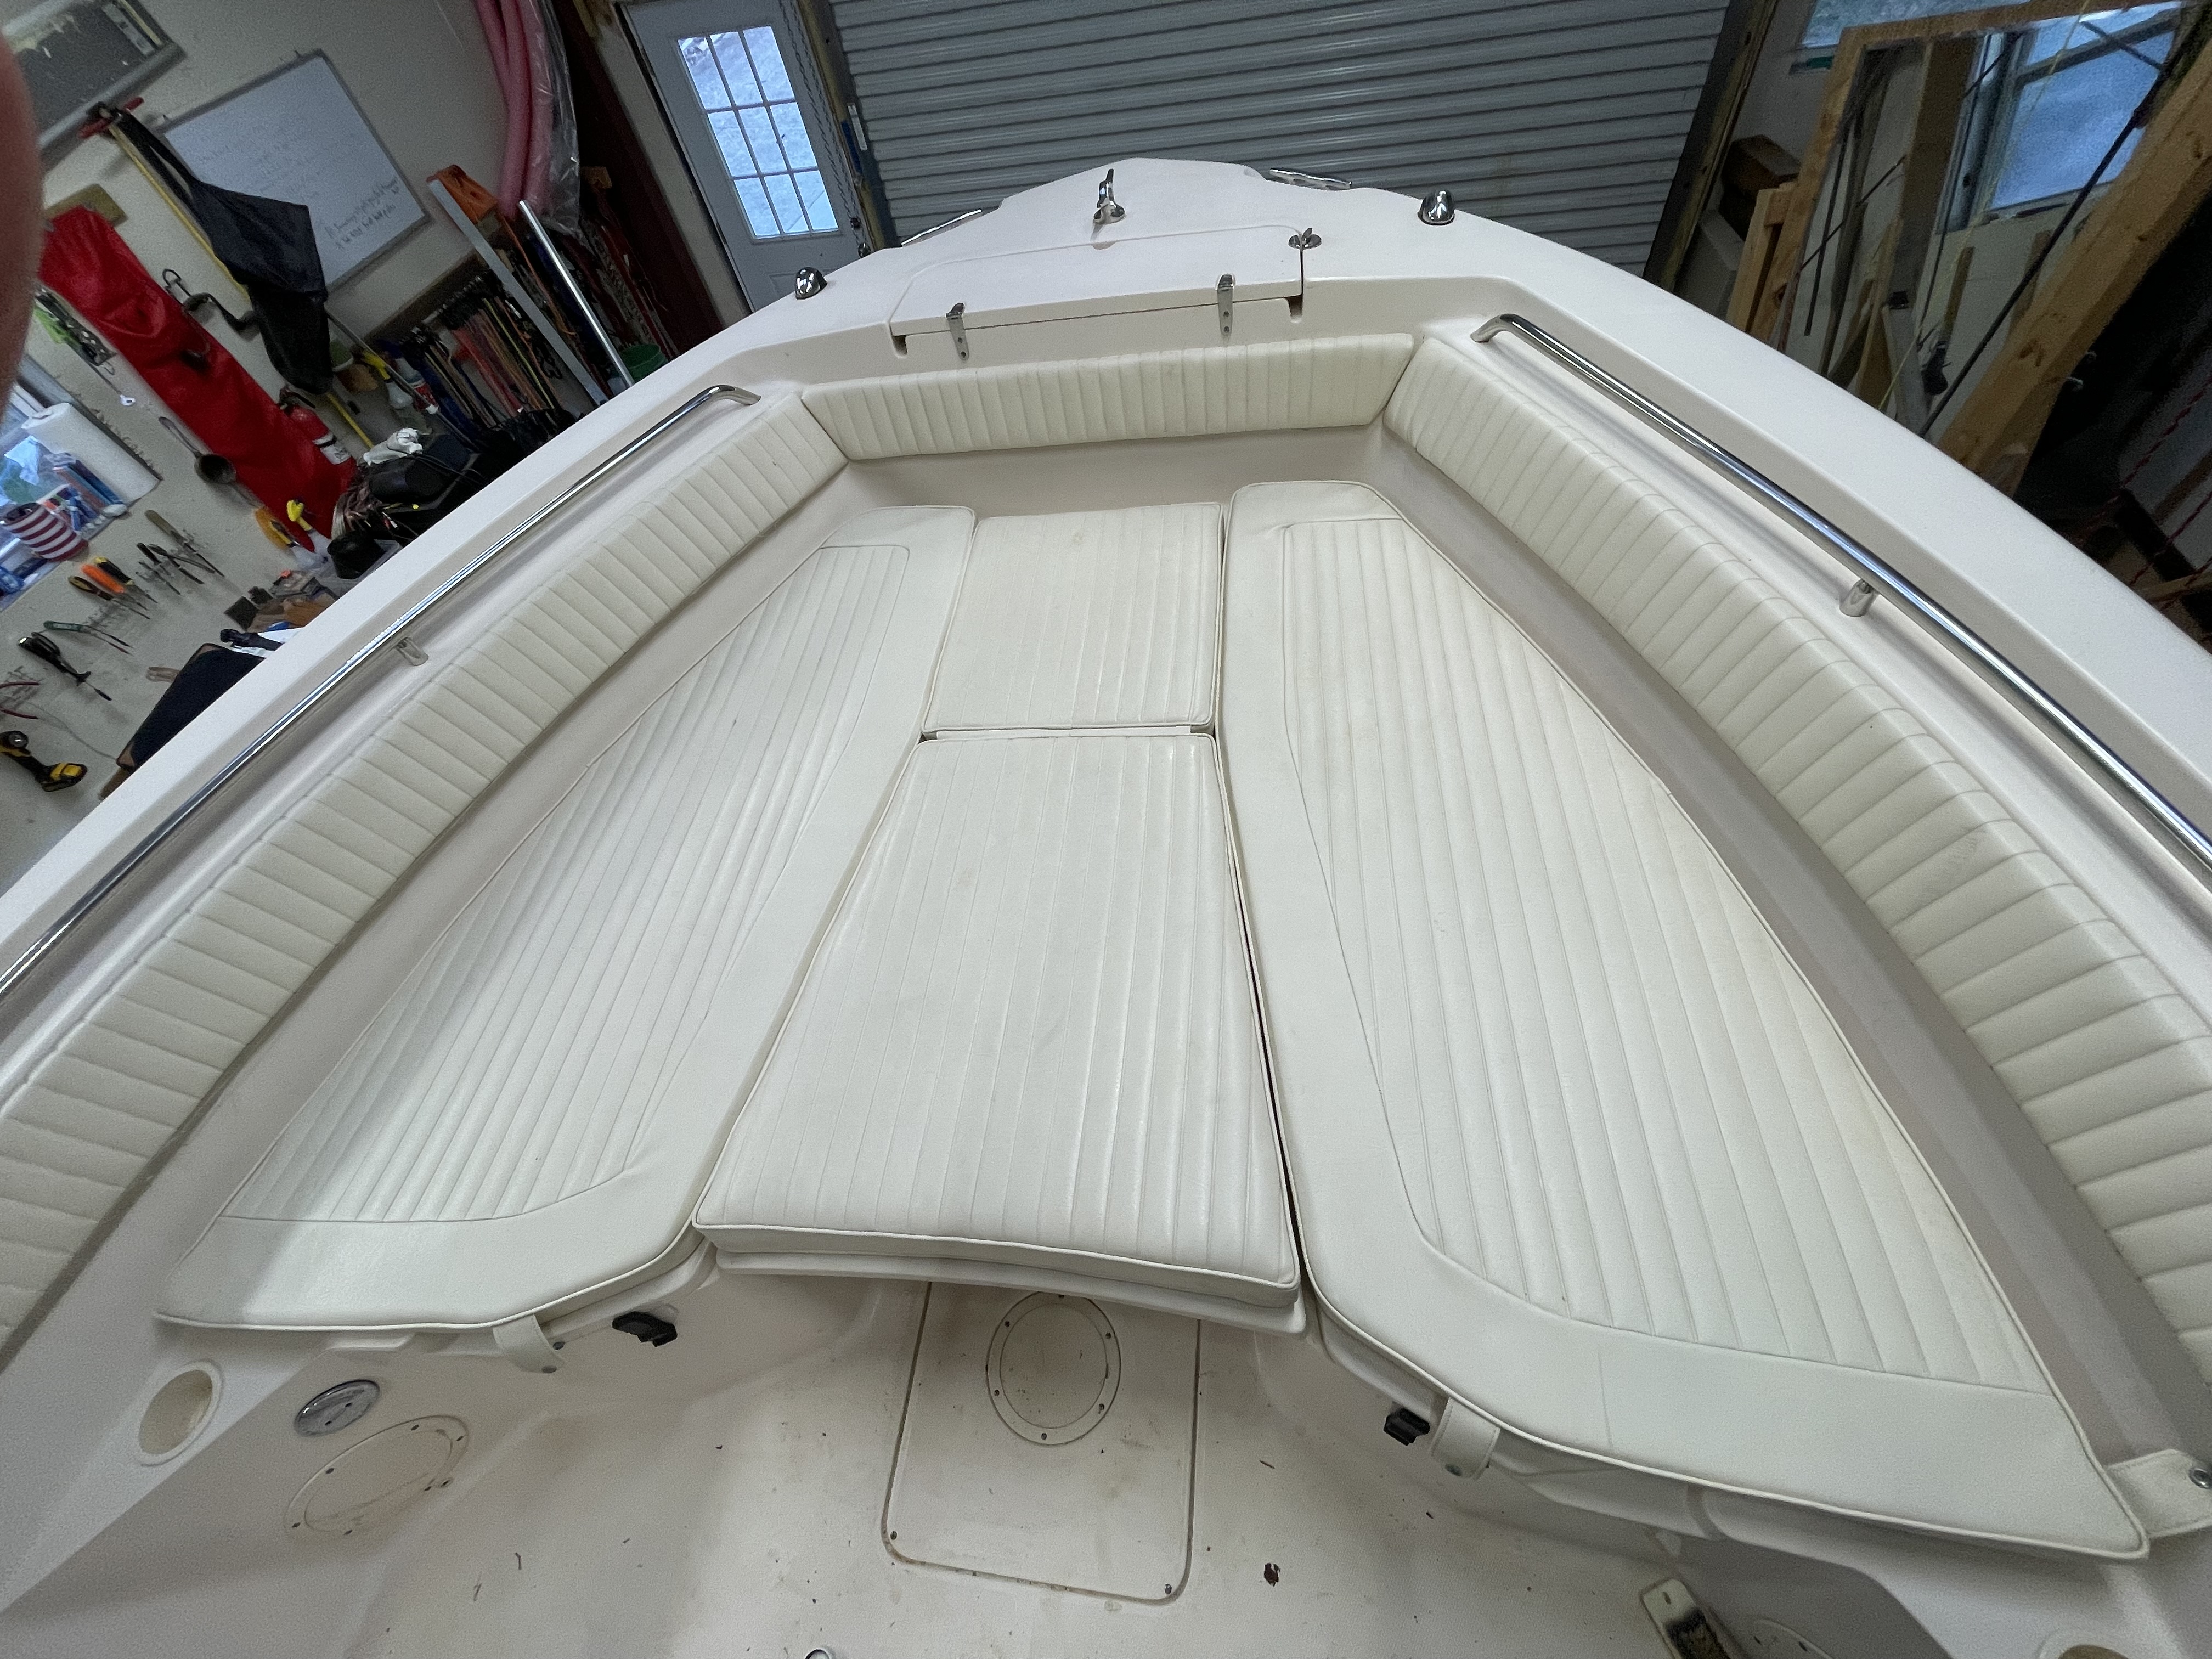 2007 Grady-White 283 Release Power boat for sale in Gainesville, GA - image 36 